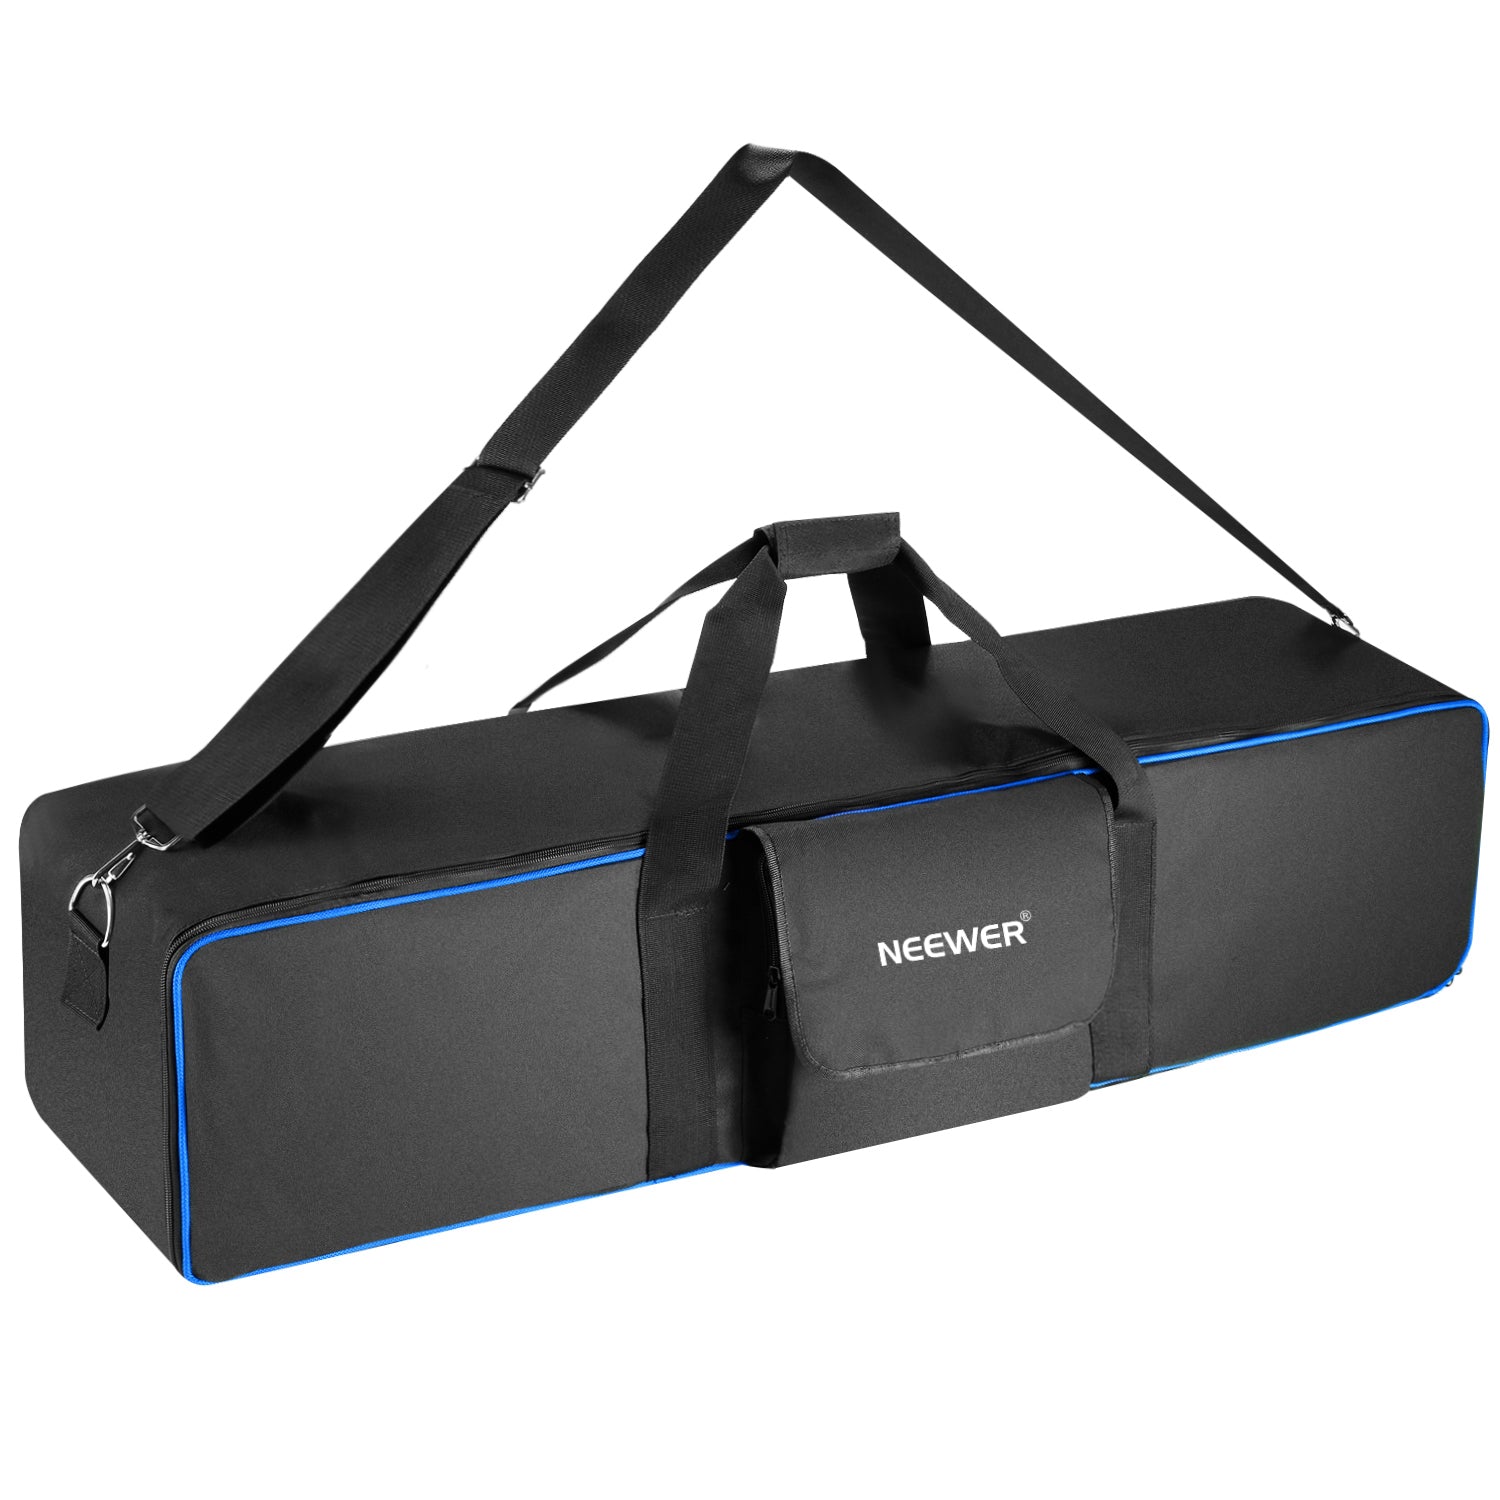 Neewer Pro Camera Case Sling Backpack Bag for Nikon Canon Sony Orange  Interior | eBay